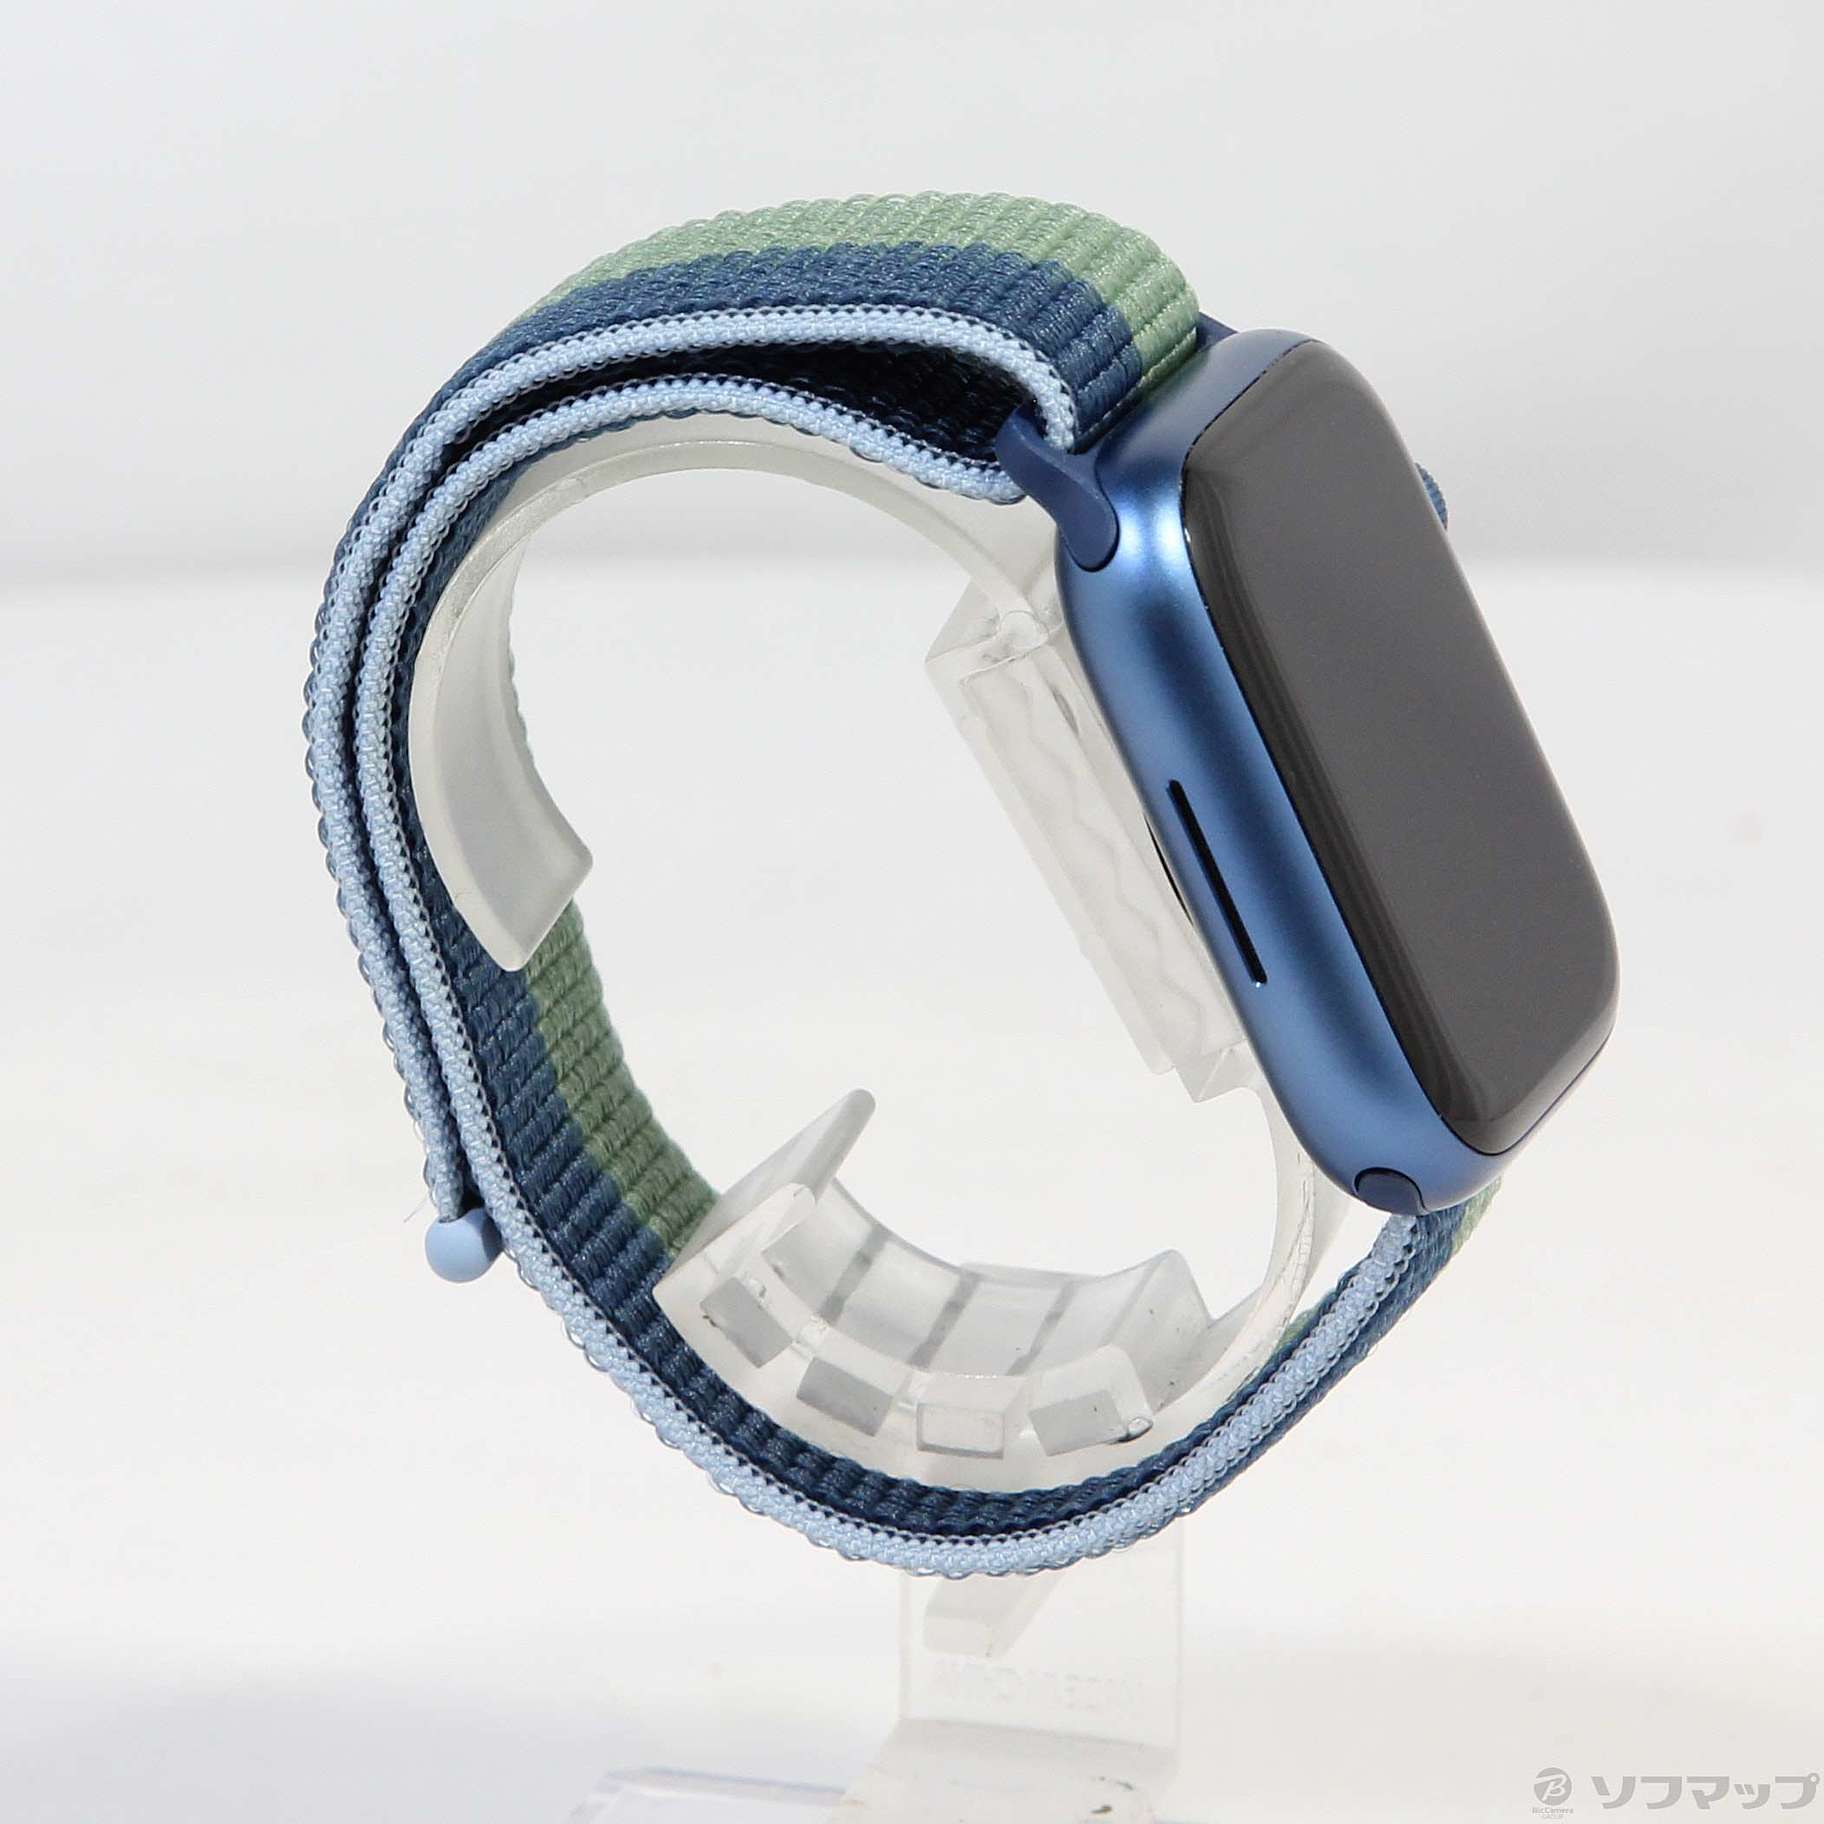 Apple Watch 45mm アビスブルー モスグリーン スポーツループ